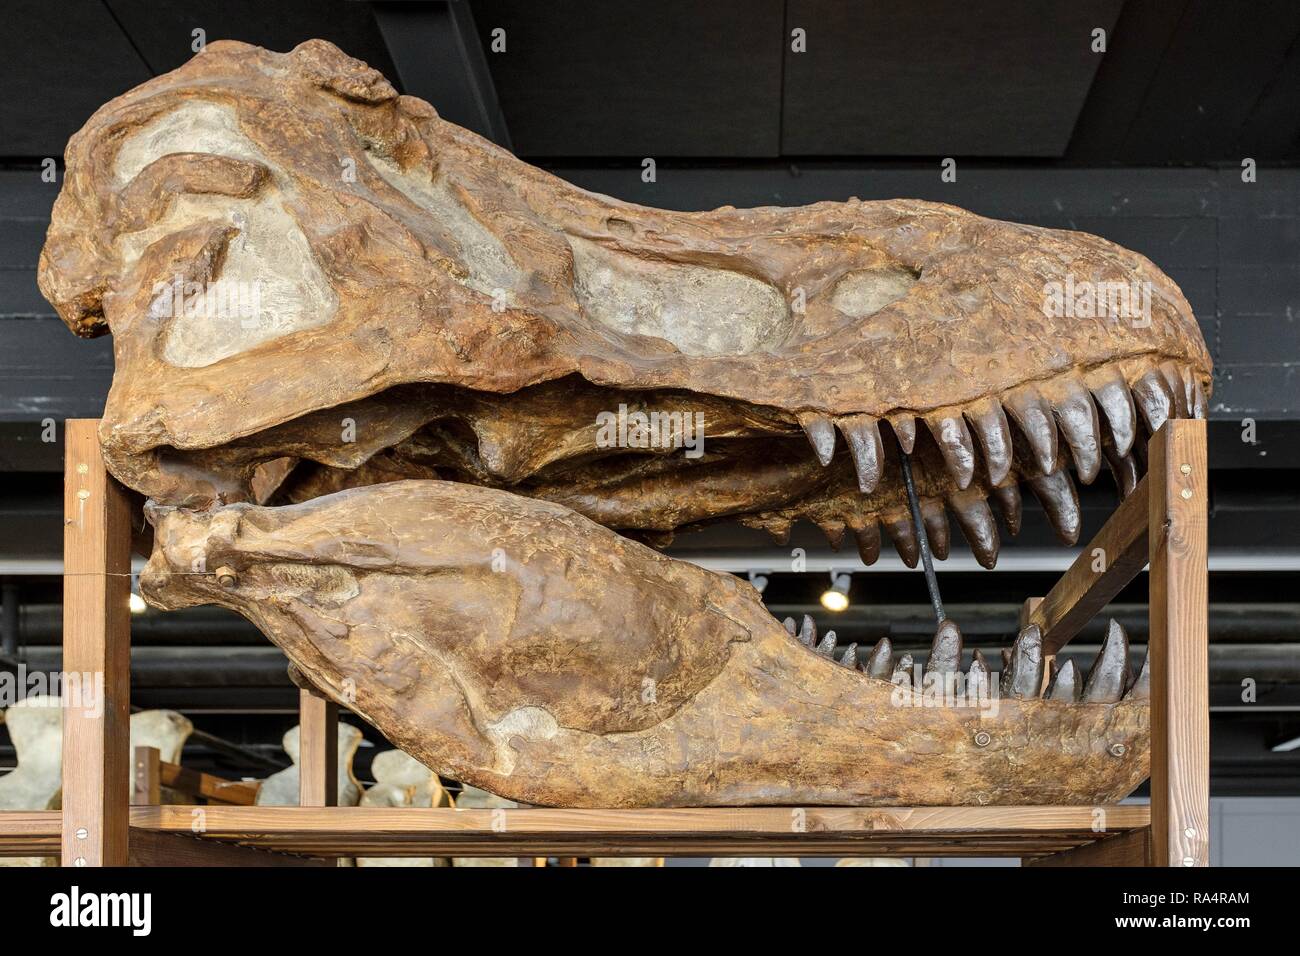 Dania - region Zealand - Kopenhaga - Muzeum Historii Naturalnej - Muzeum Zoologiczne , eksponat - model czaszki prehistorycznego gatunku dinozaura - Tyranozaur Denmark - Zealand region - Copenhagen - Stock Photo